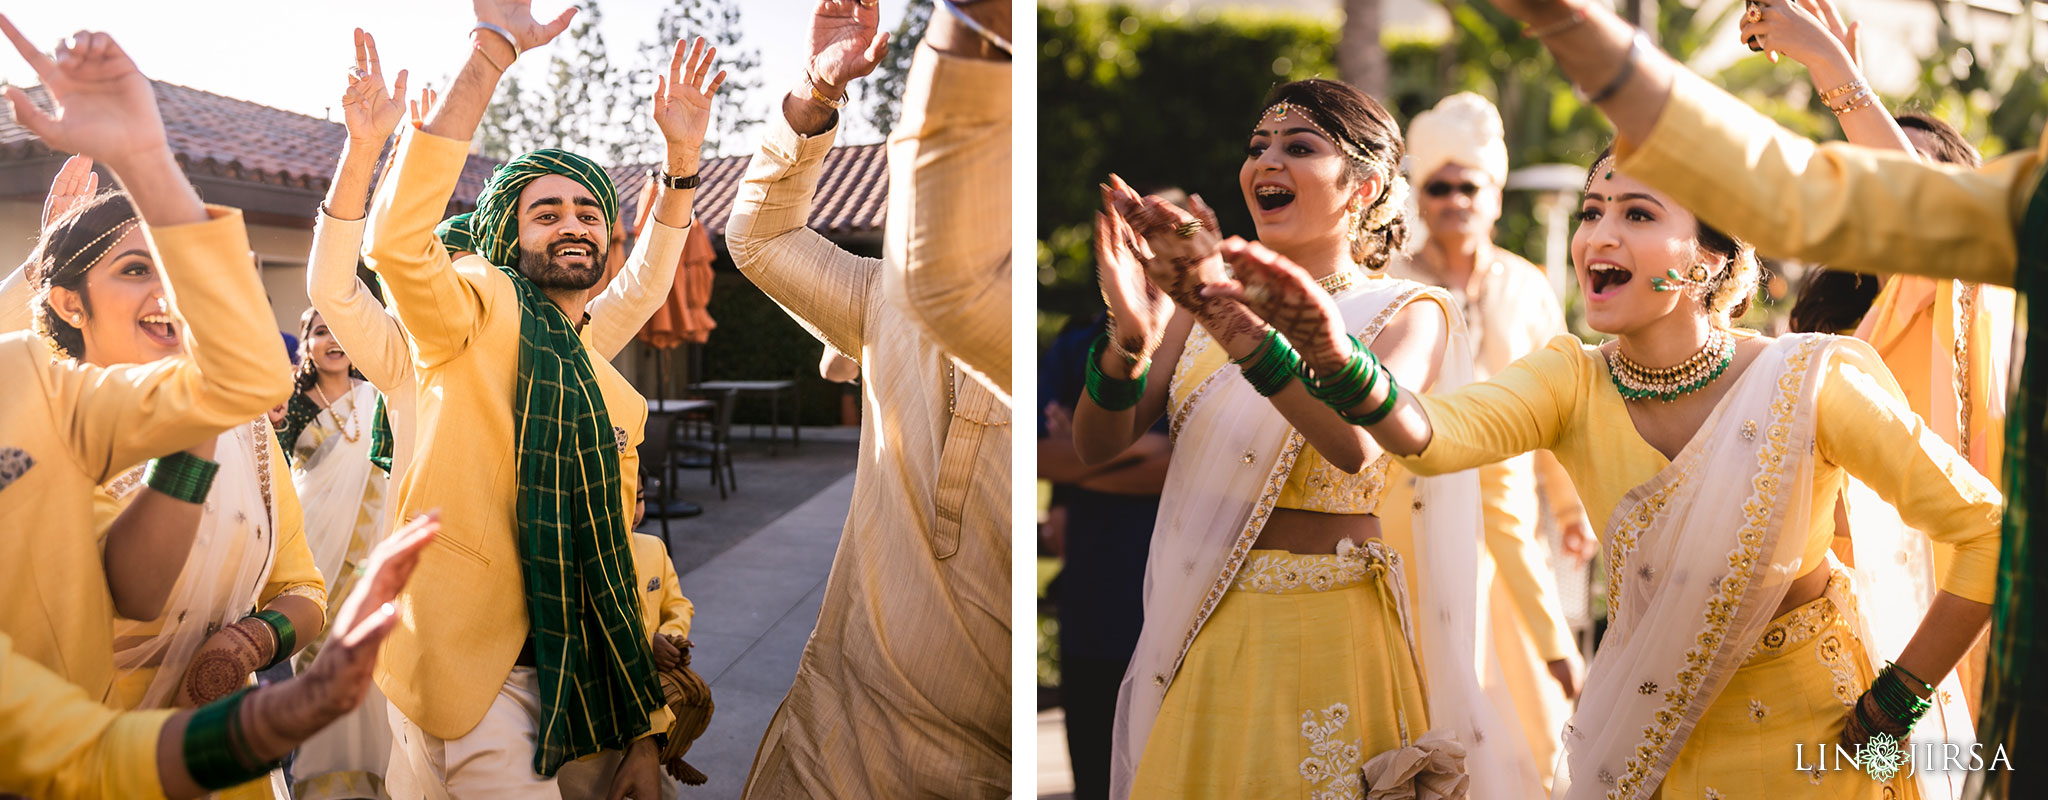 26 hotel irvine indian wedding baraat photography